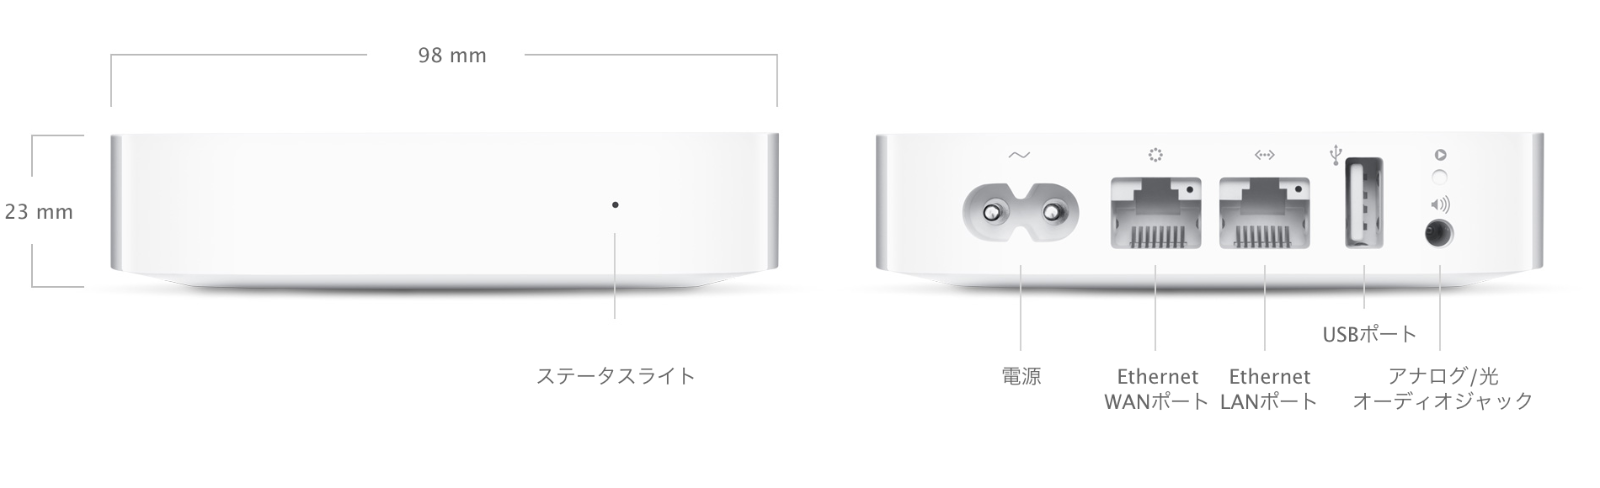 AirMac Express 802.11n (第2世代) - 技術仕様 - Apple サポート (日本)